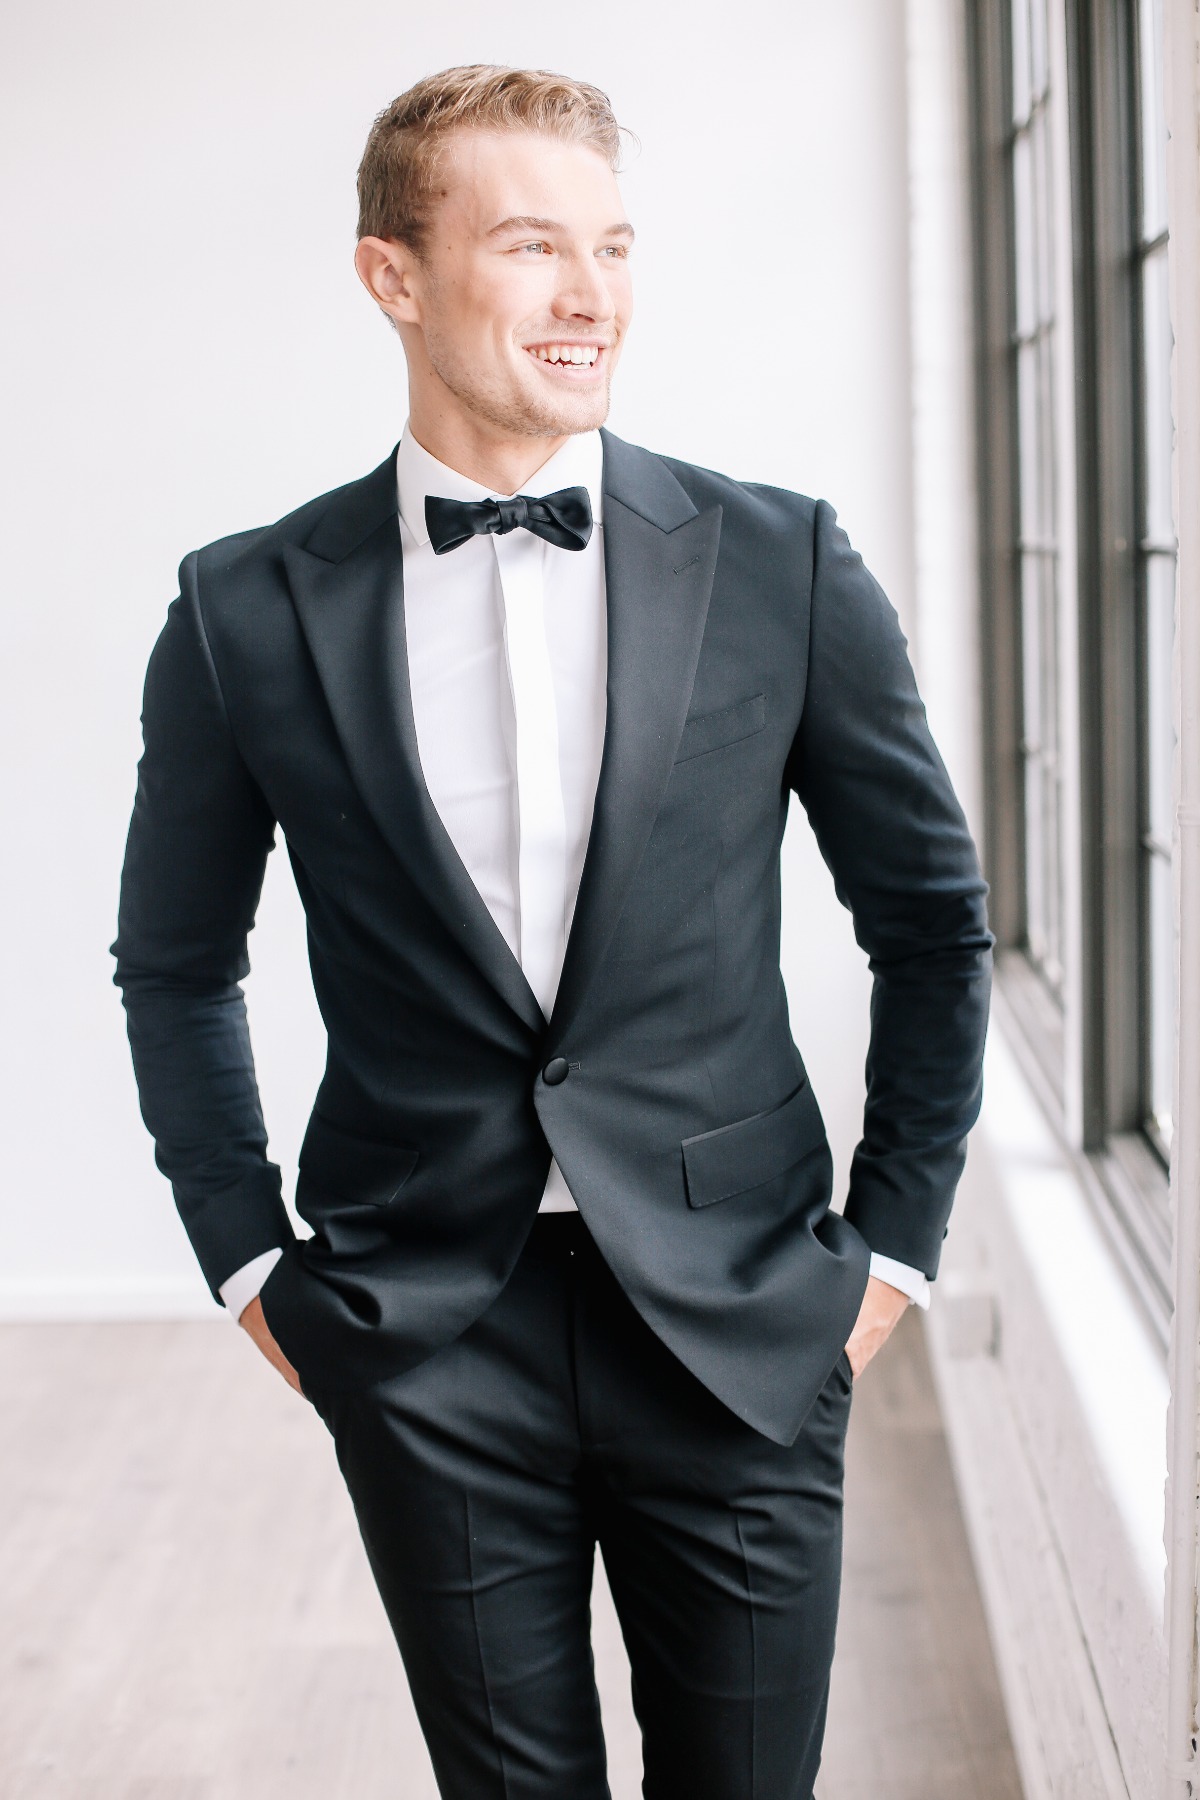 Stylish groom in black tie